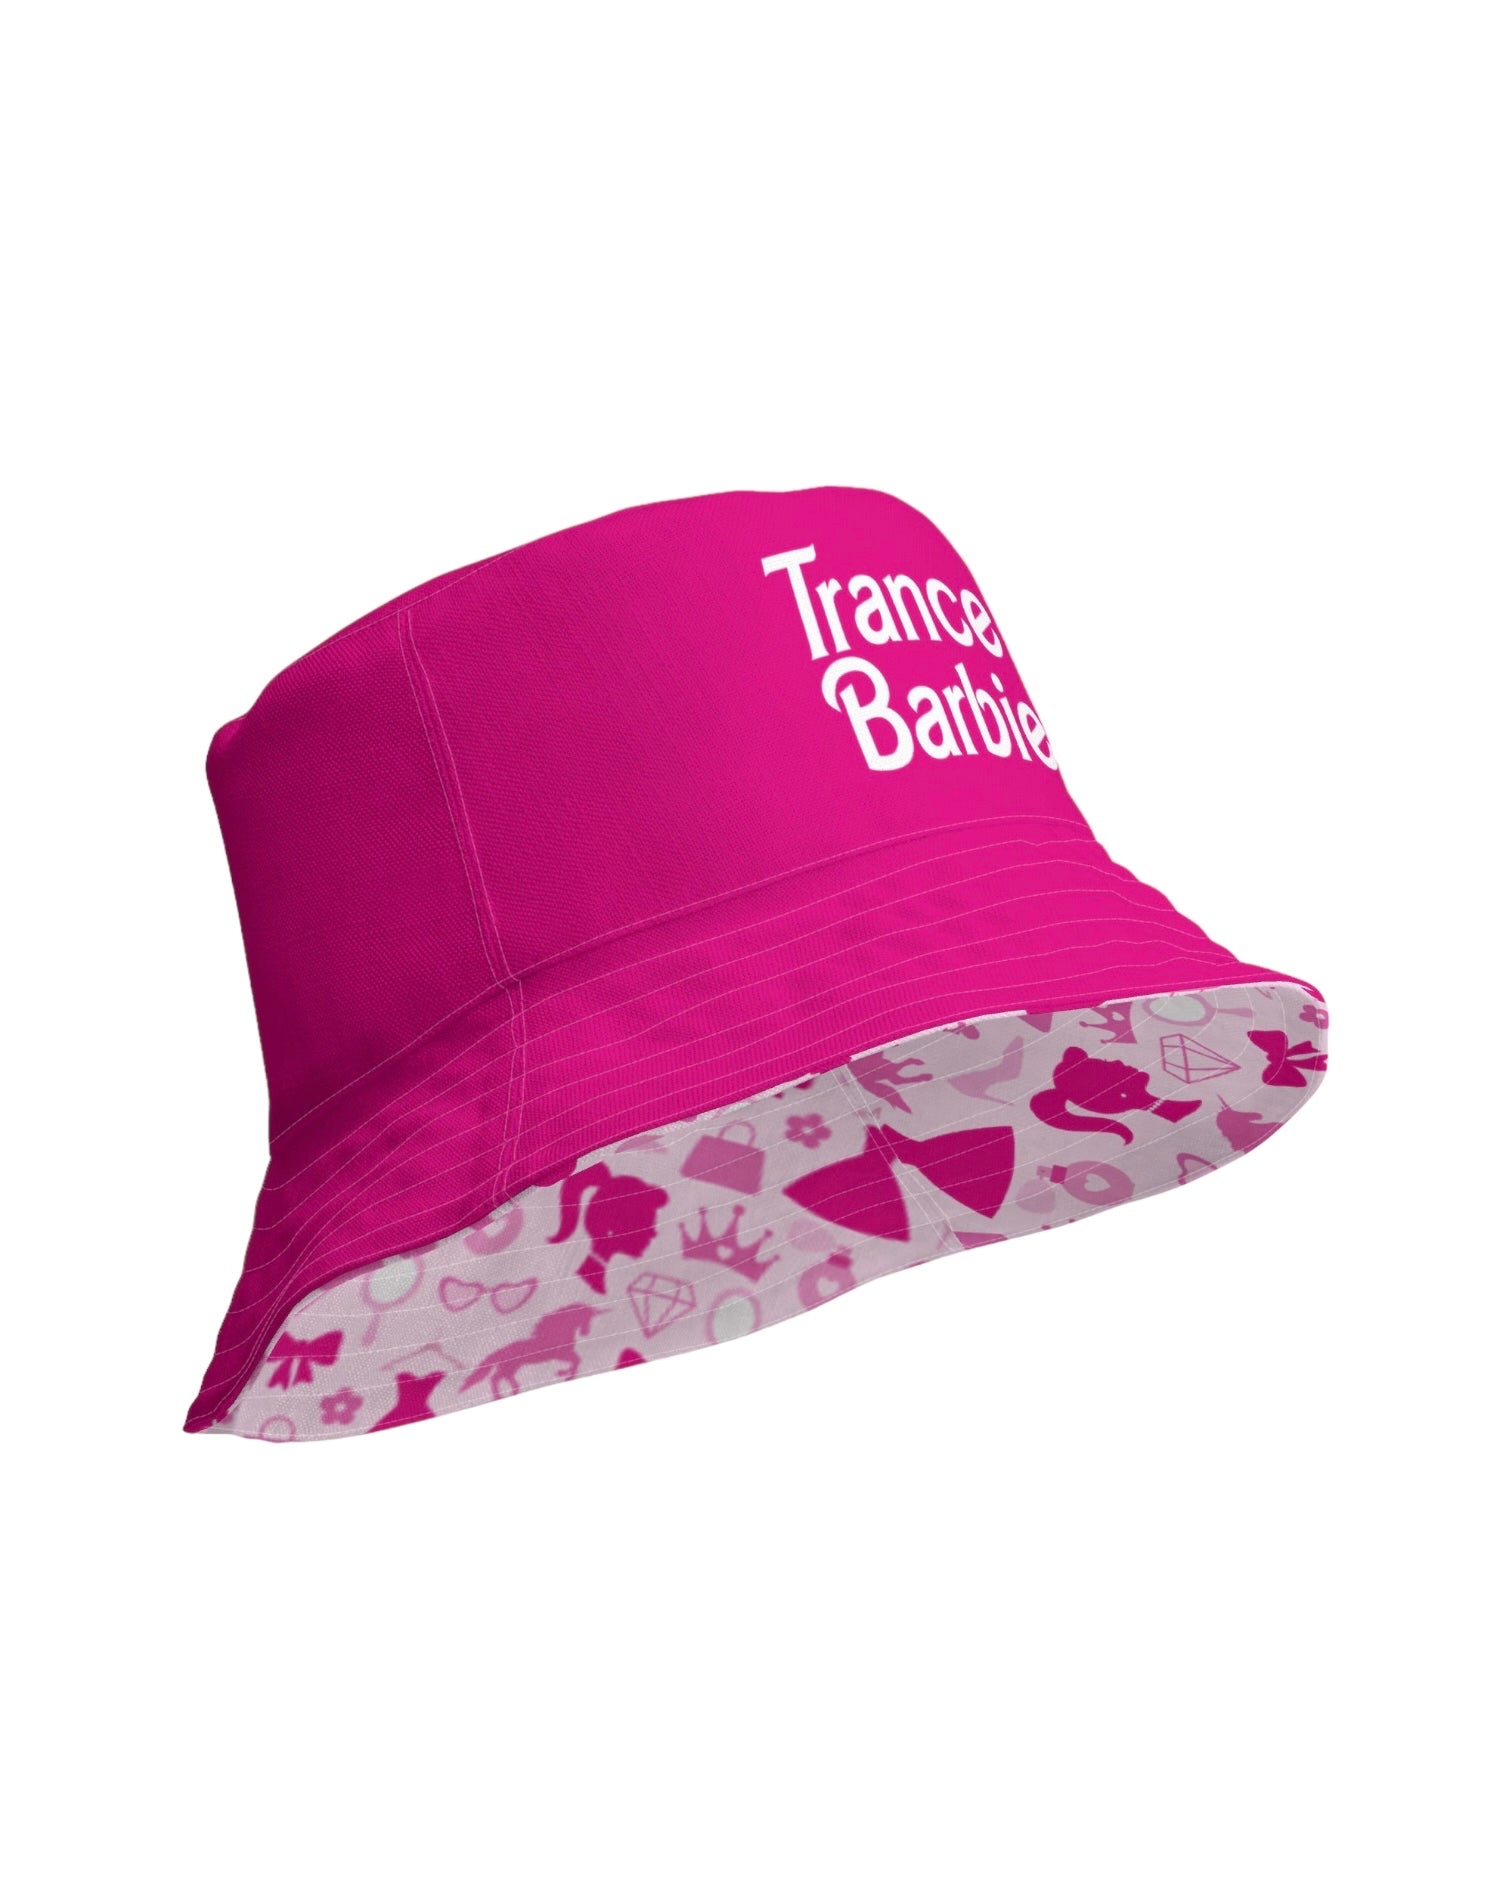 Trance Barbie Reversible Bucket Hat